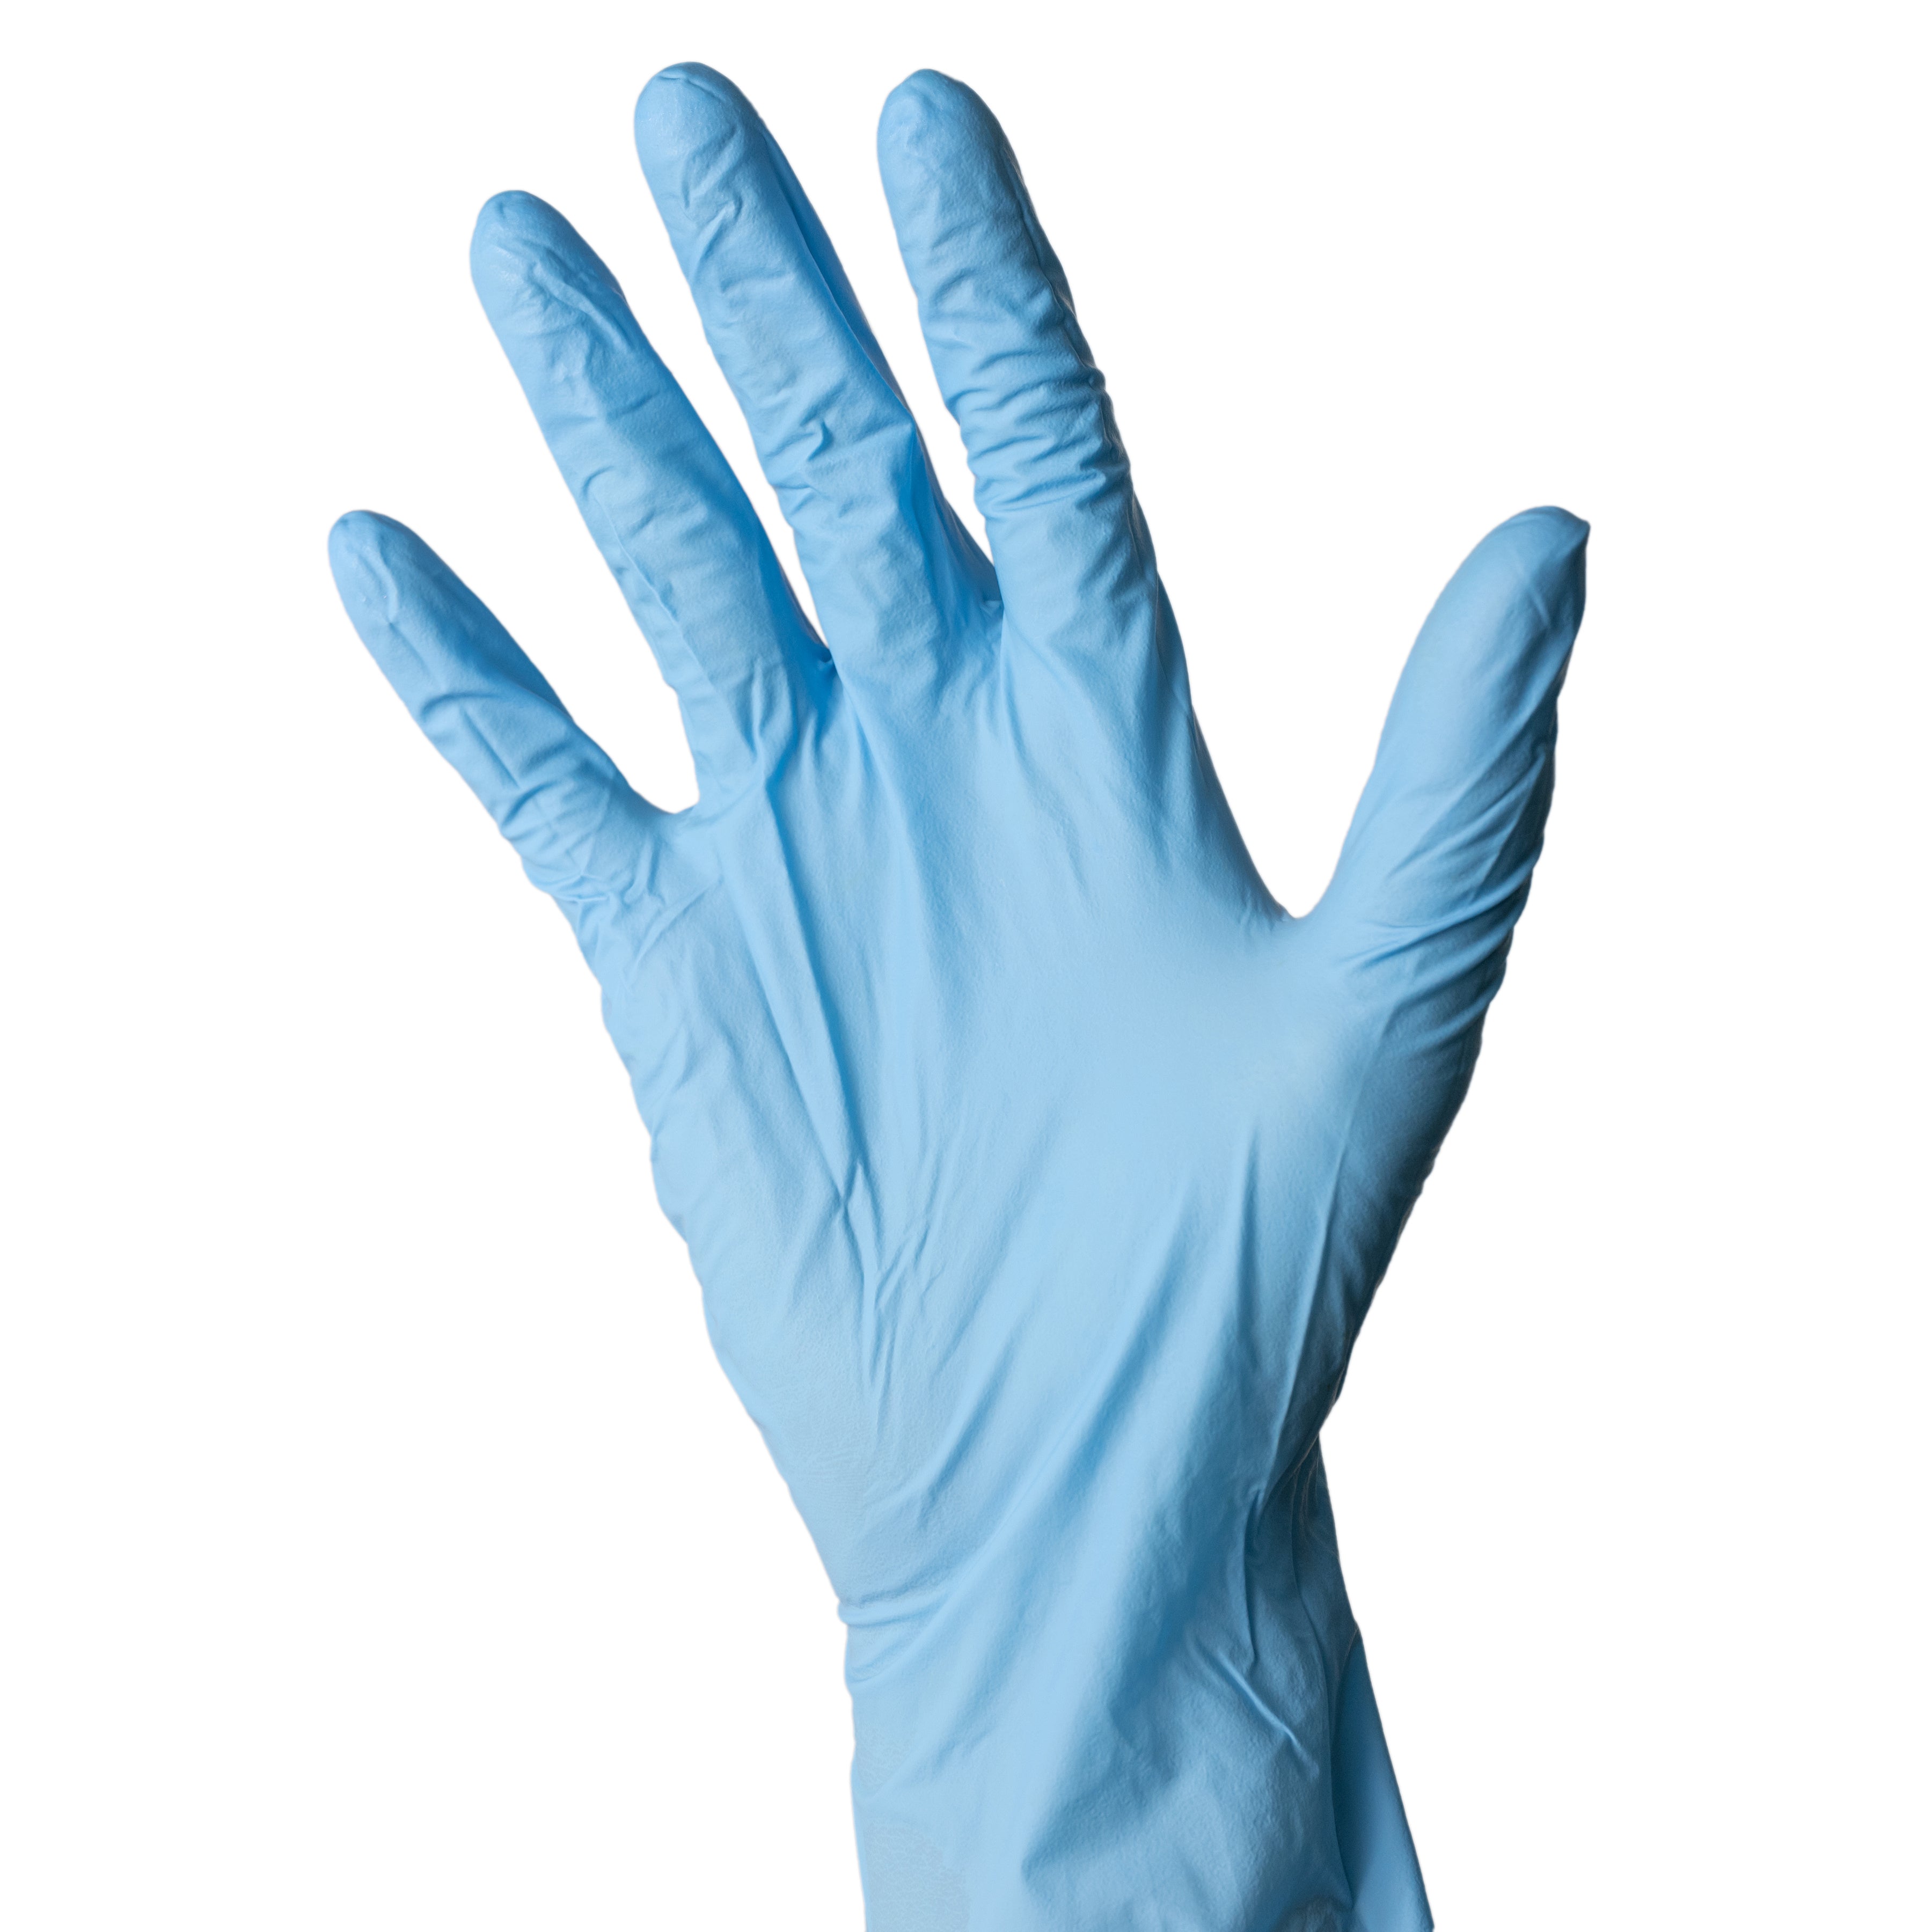 Cascade Blue Nitrile Exam Gloves